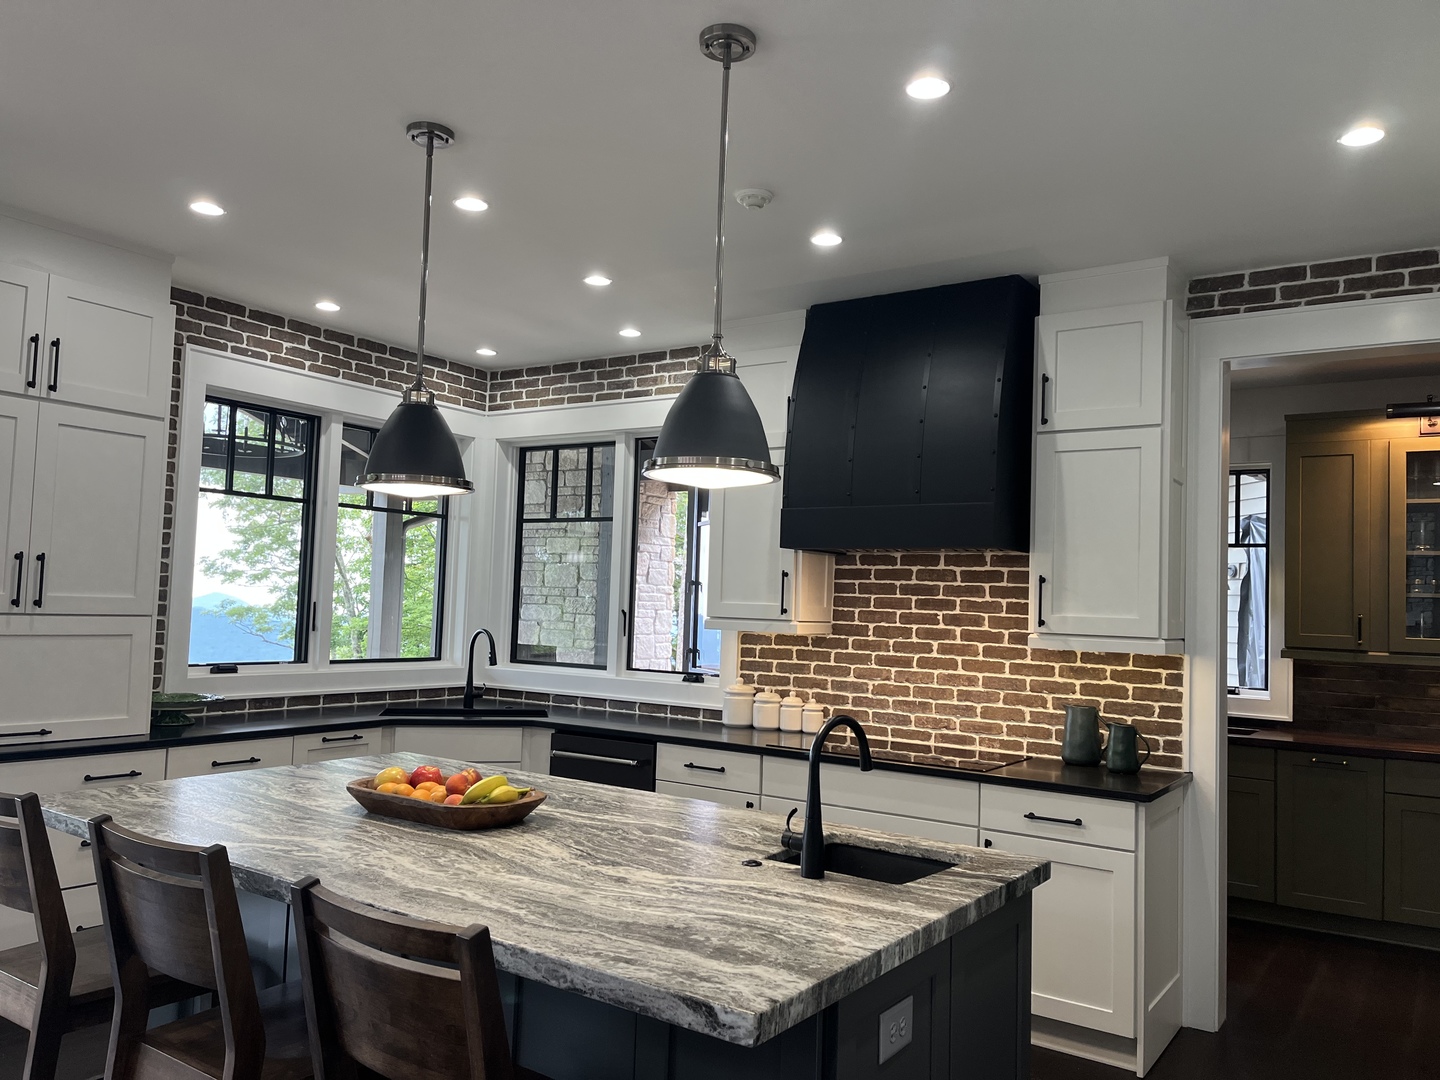 Great kitchen design with range hood, combining white cabinets,black countertops charming brick backsplash